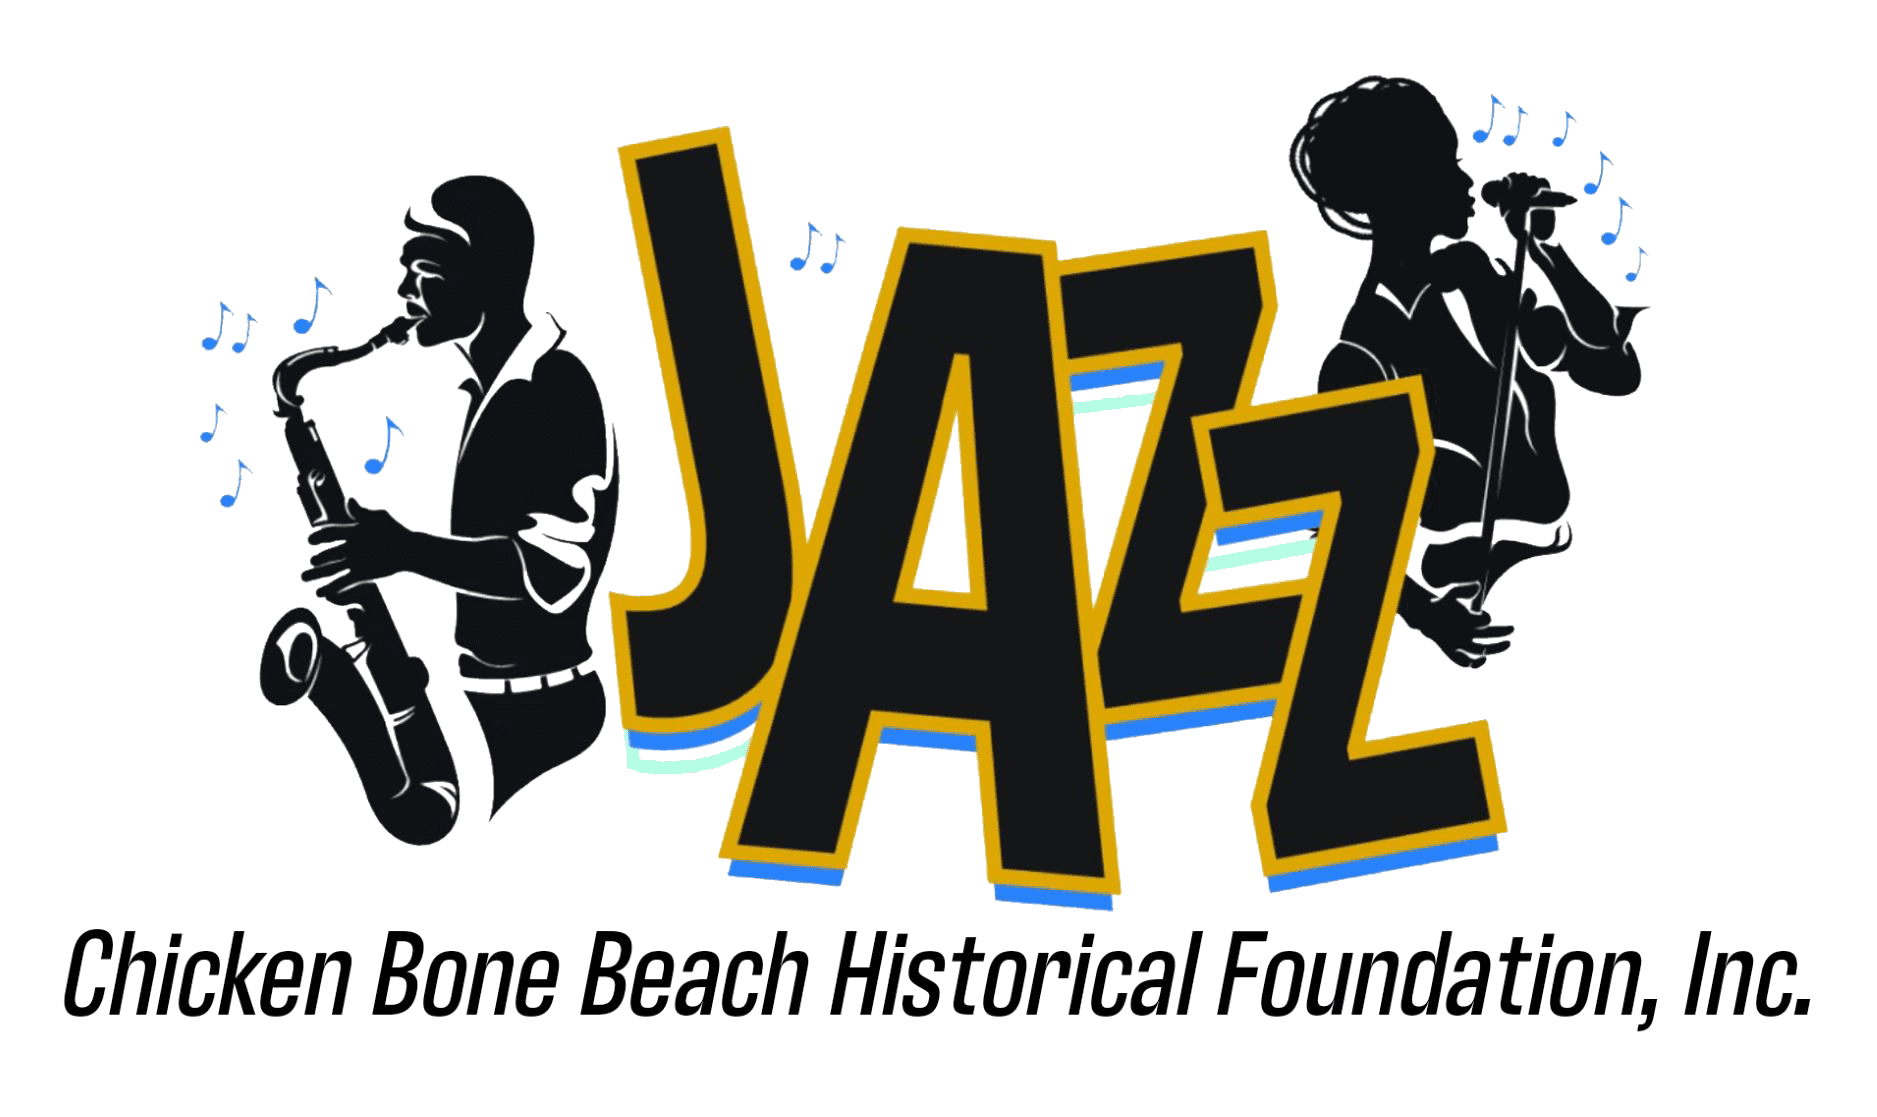 Contact Chicken Bone Beach Historical Foundation, Inc. New Jersey